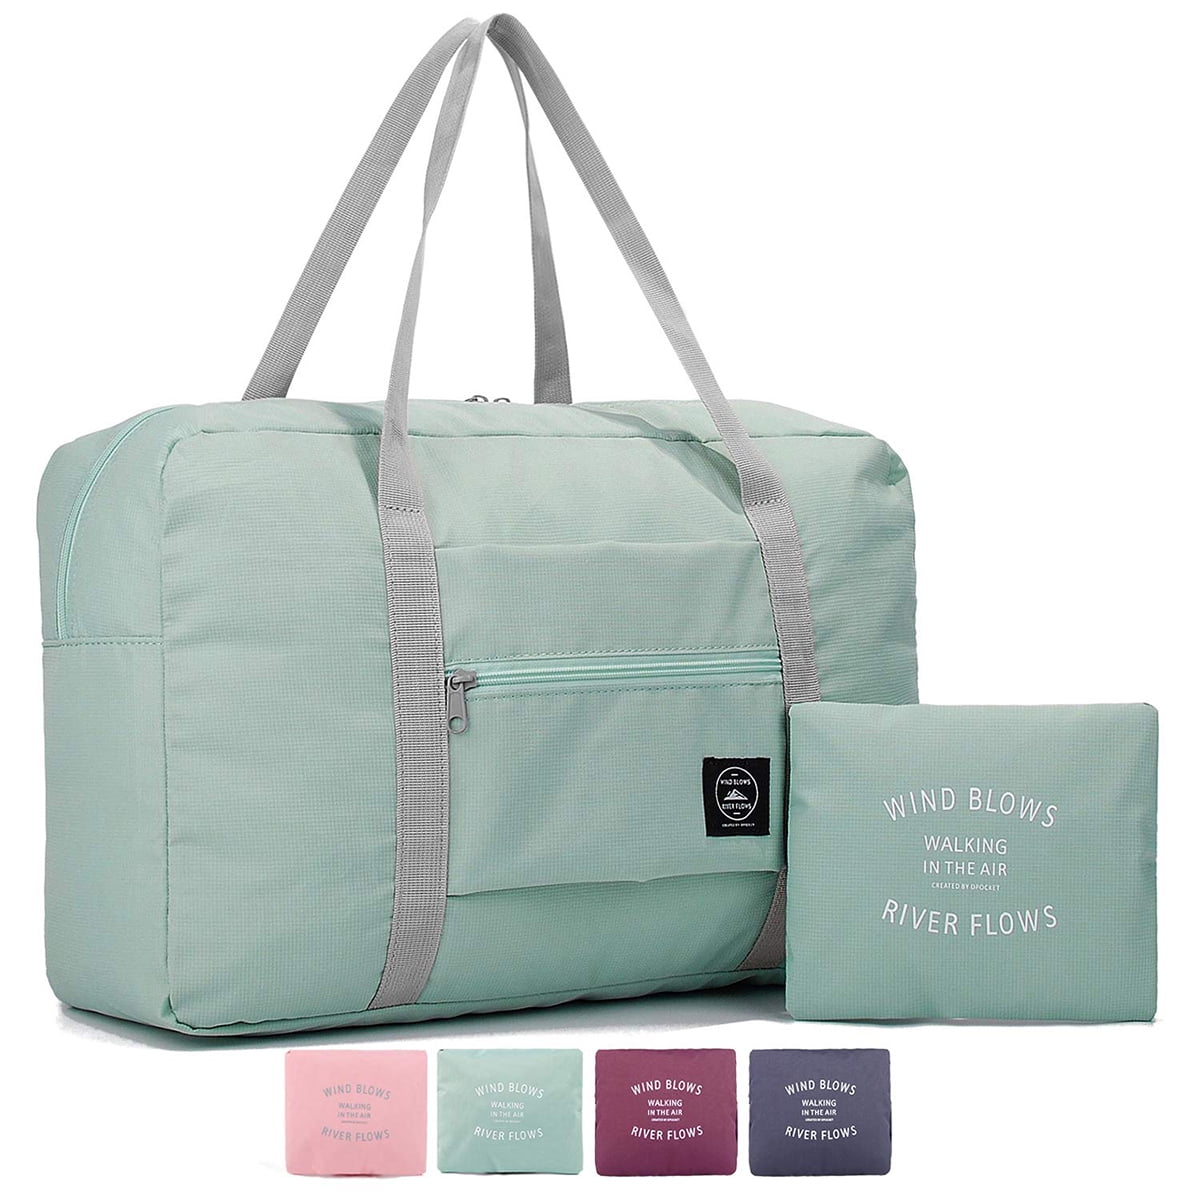 Travel Luggage Duffle Bag Lightweight Portable Handbag Pink Rose Print Large Capacity Waterproof Foldable Storage Tote